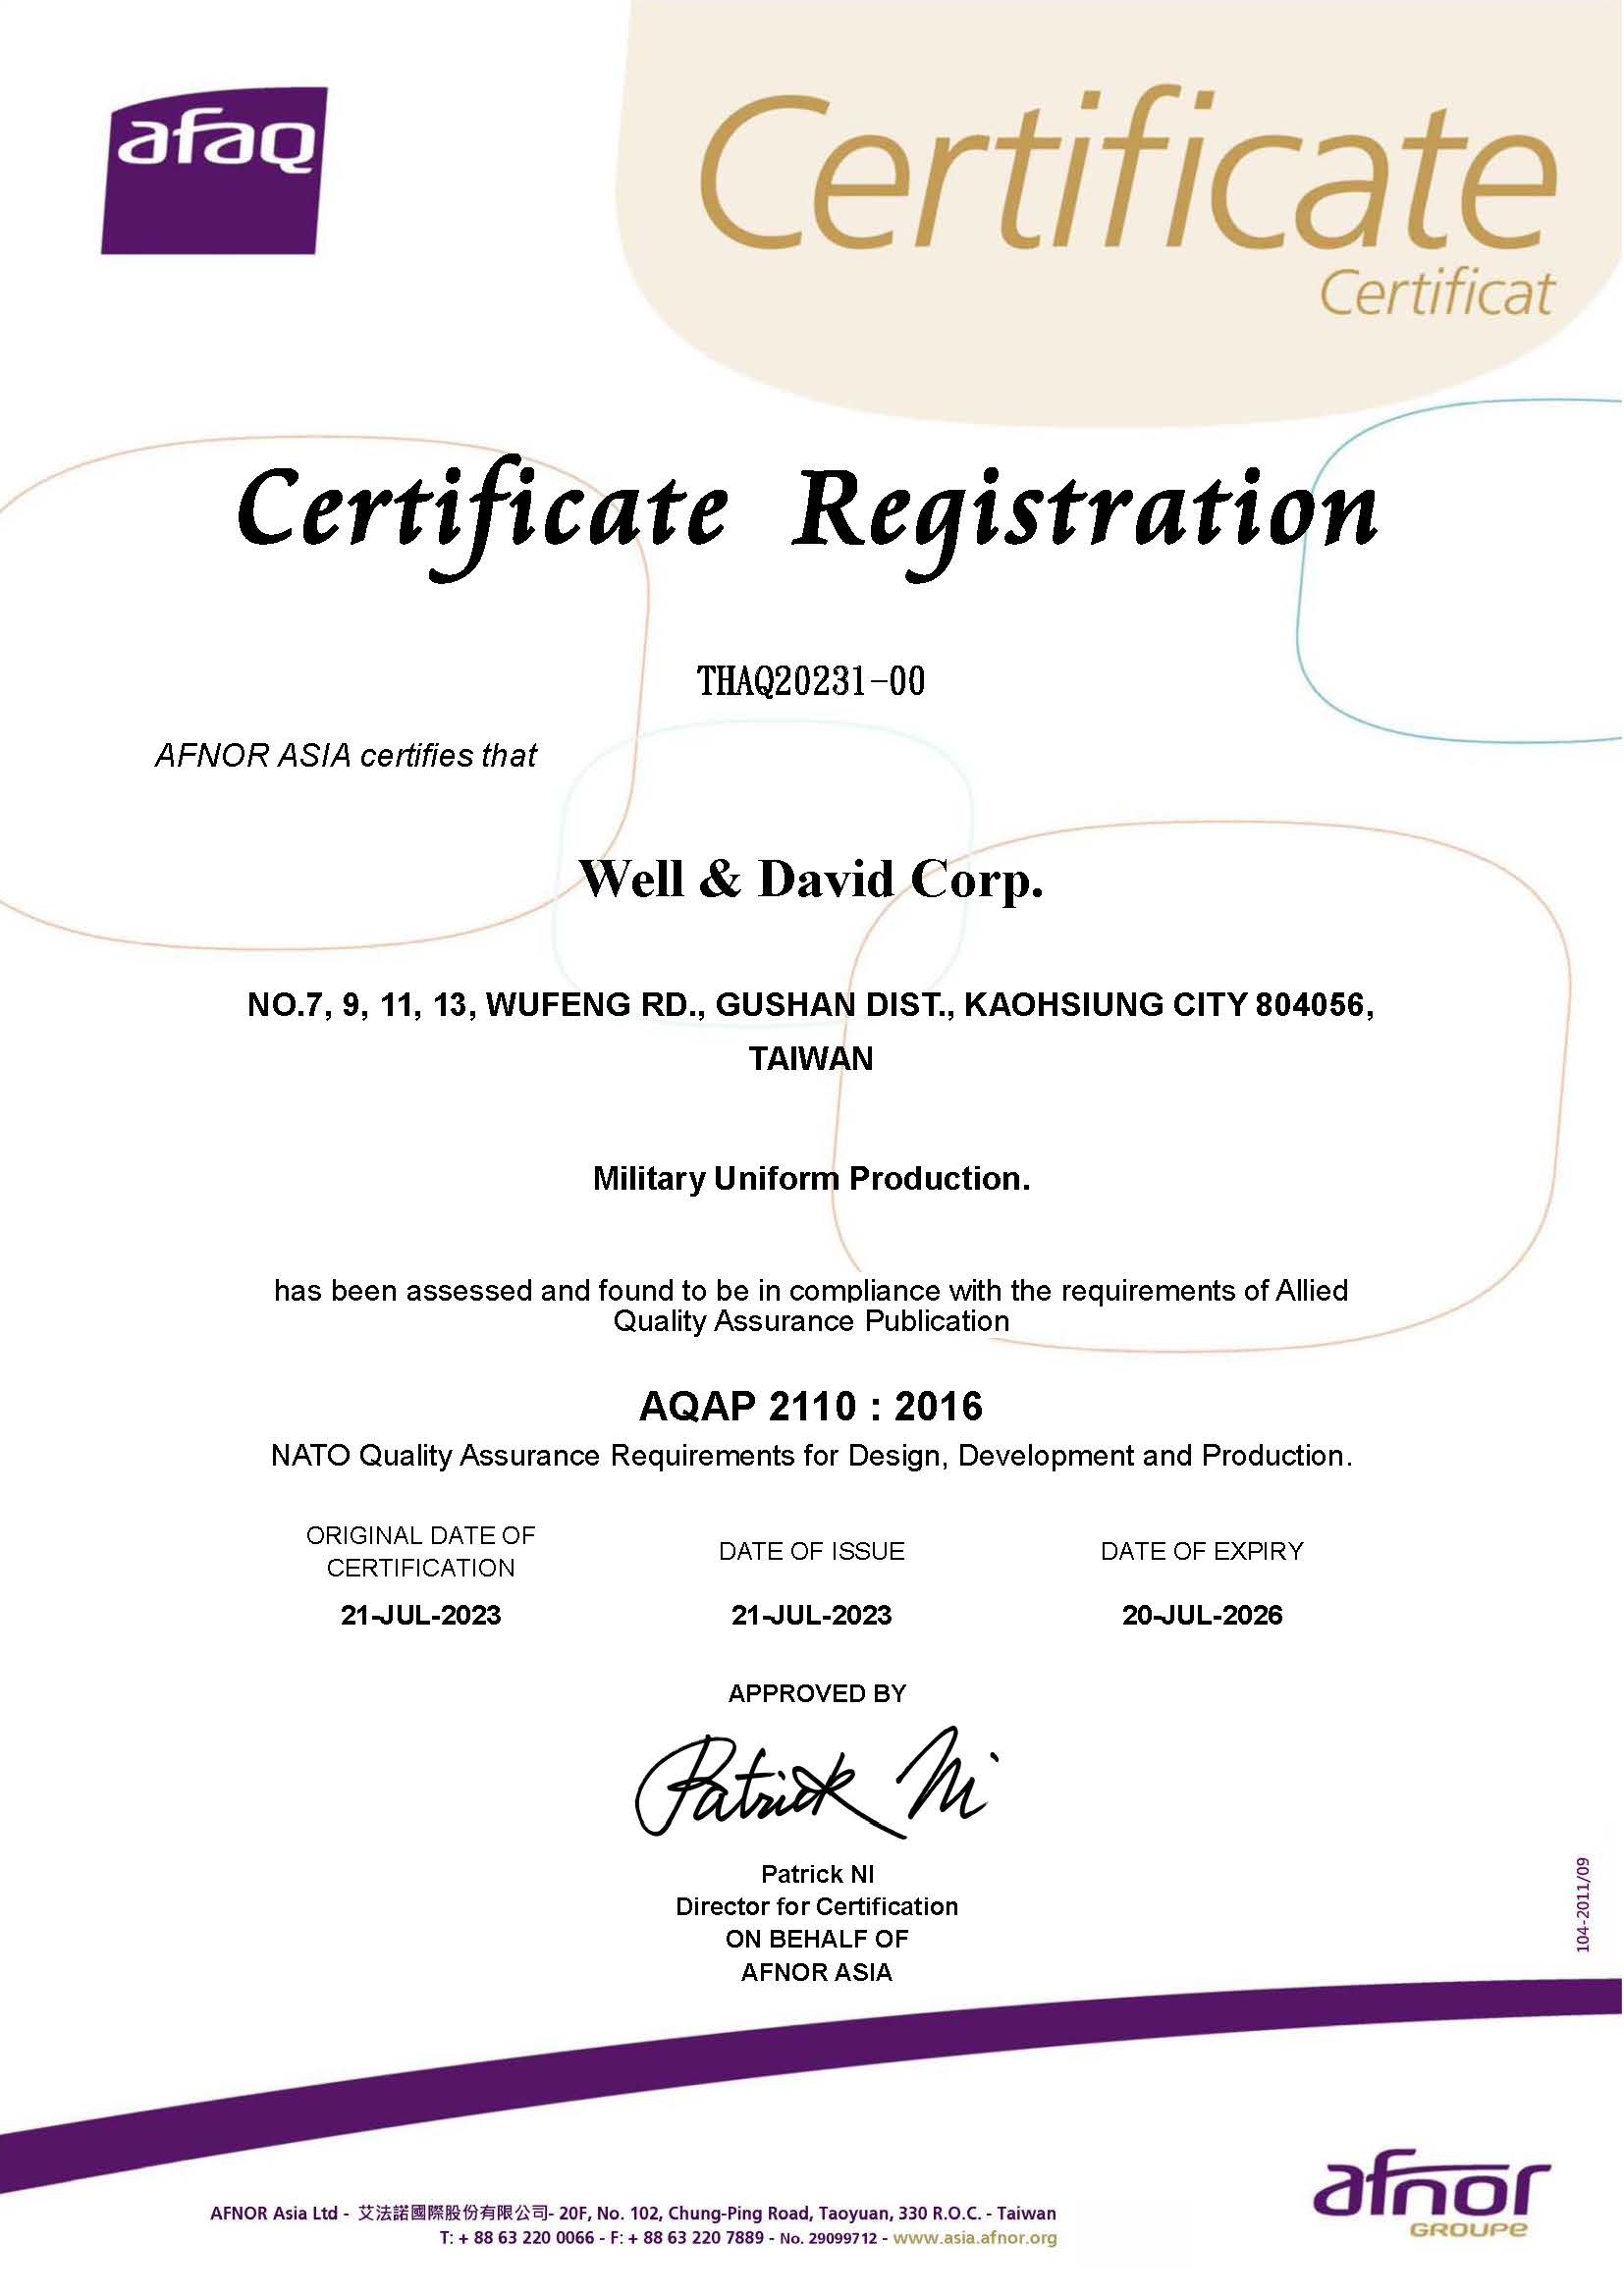 AQAP 2110 : 2016 certification